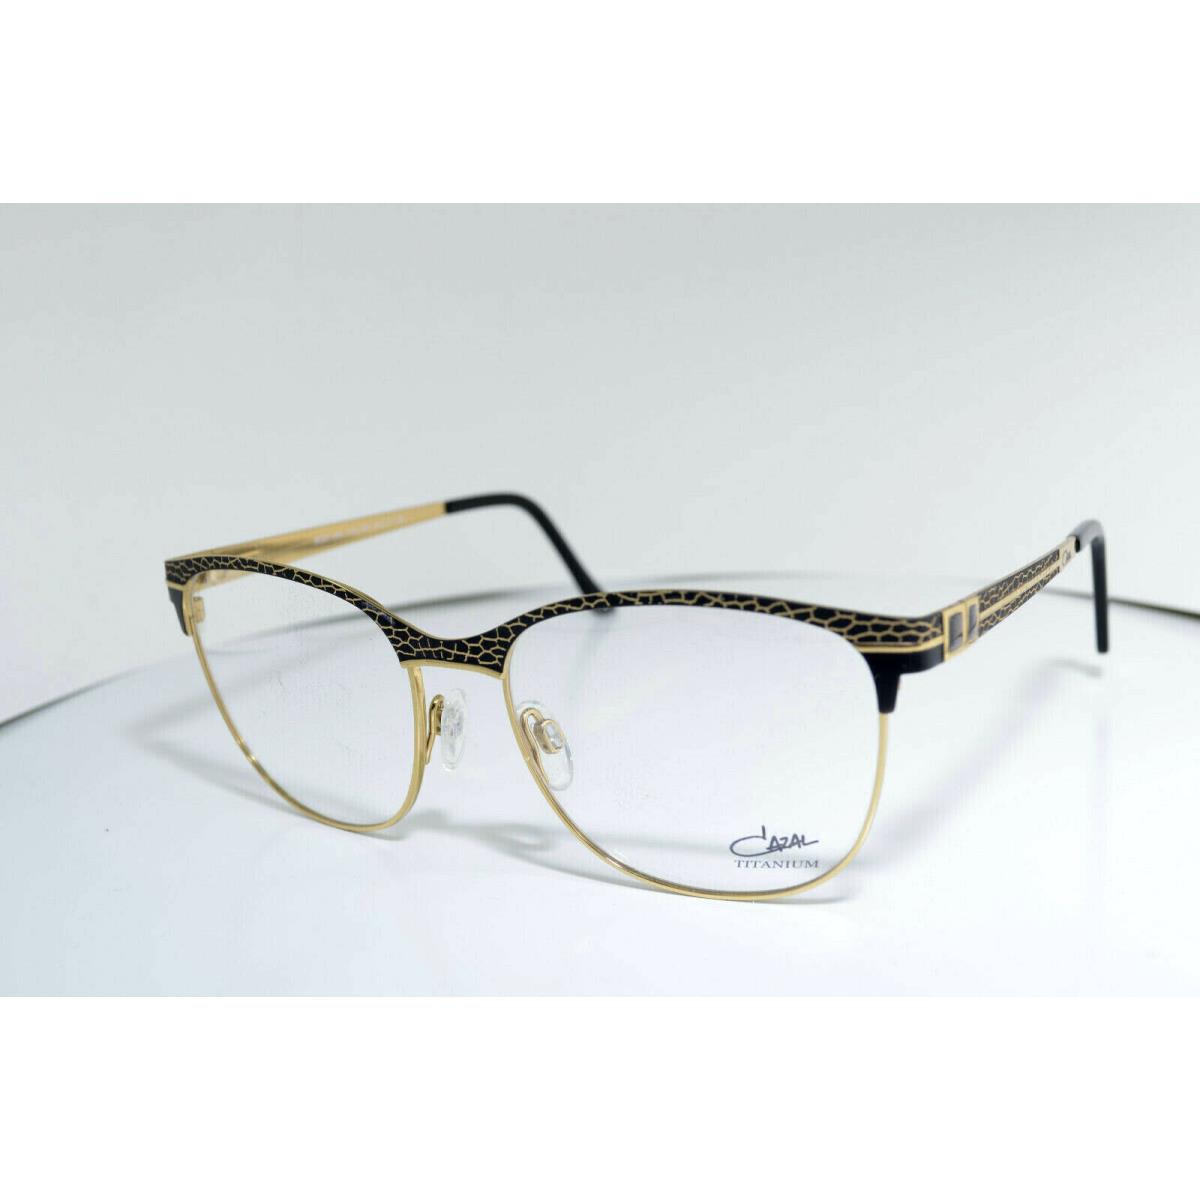 Cazal 1242 C003 Eyeglasses Frame